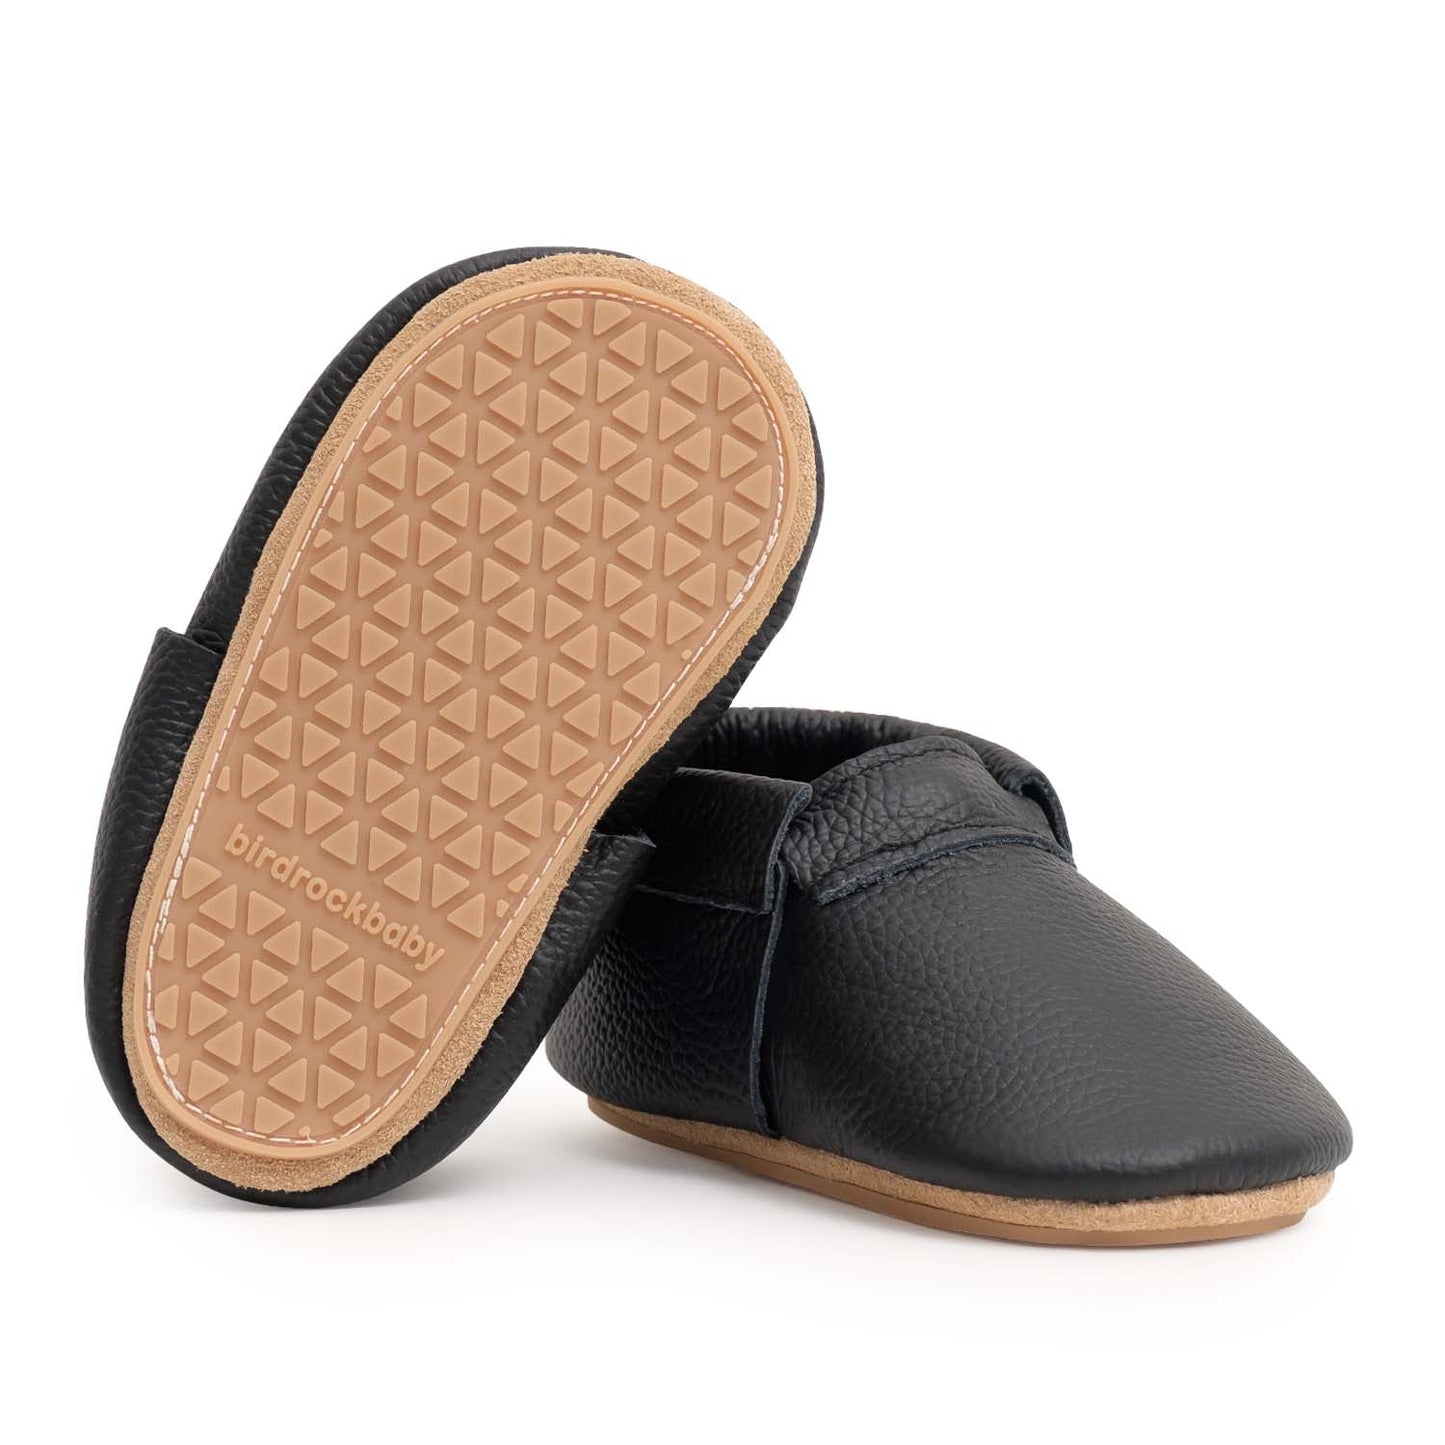 Hard Sole Fringeless Baby Moccasins -  Baby Shoes (Black)